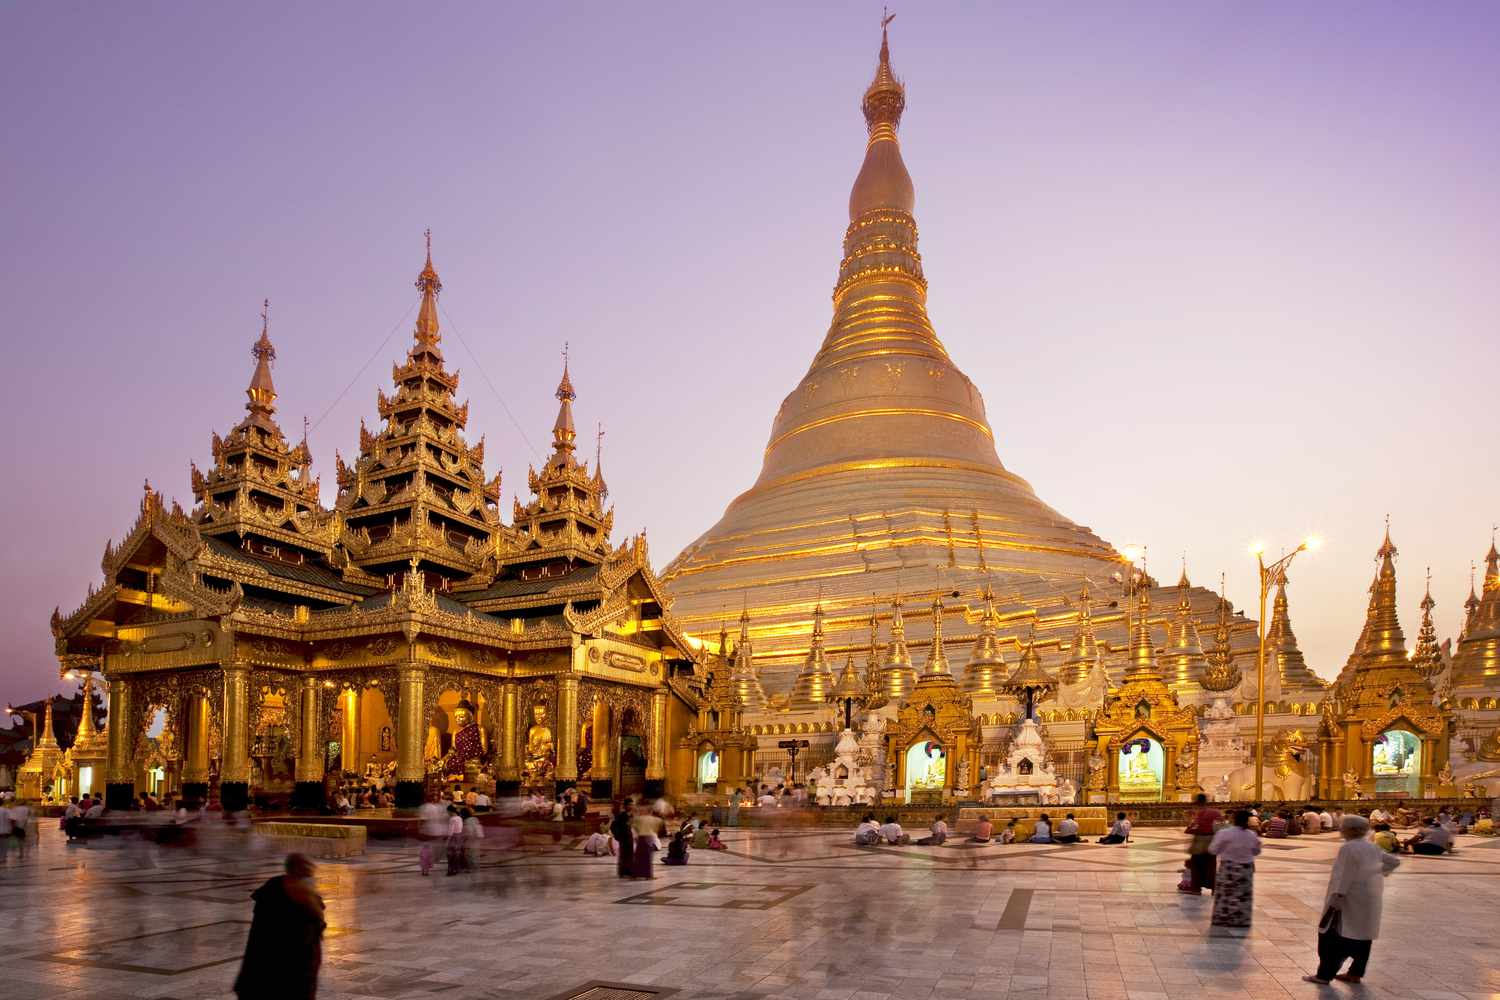 a close up of Shwedagon pagoda